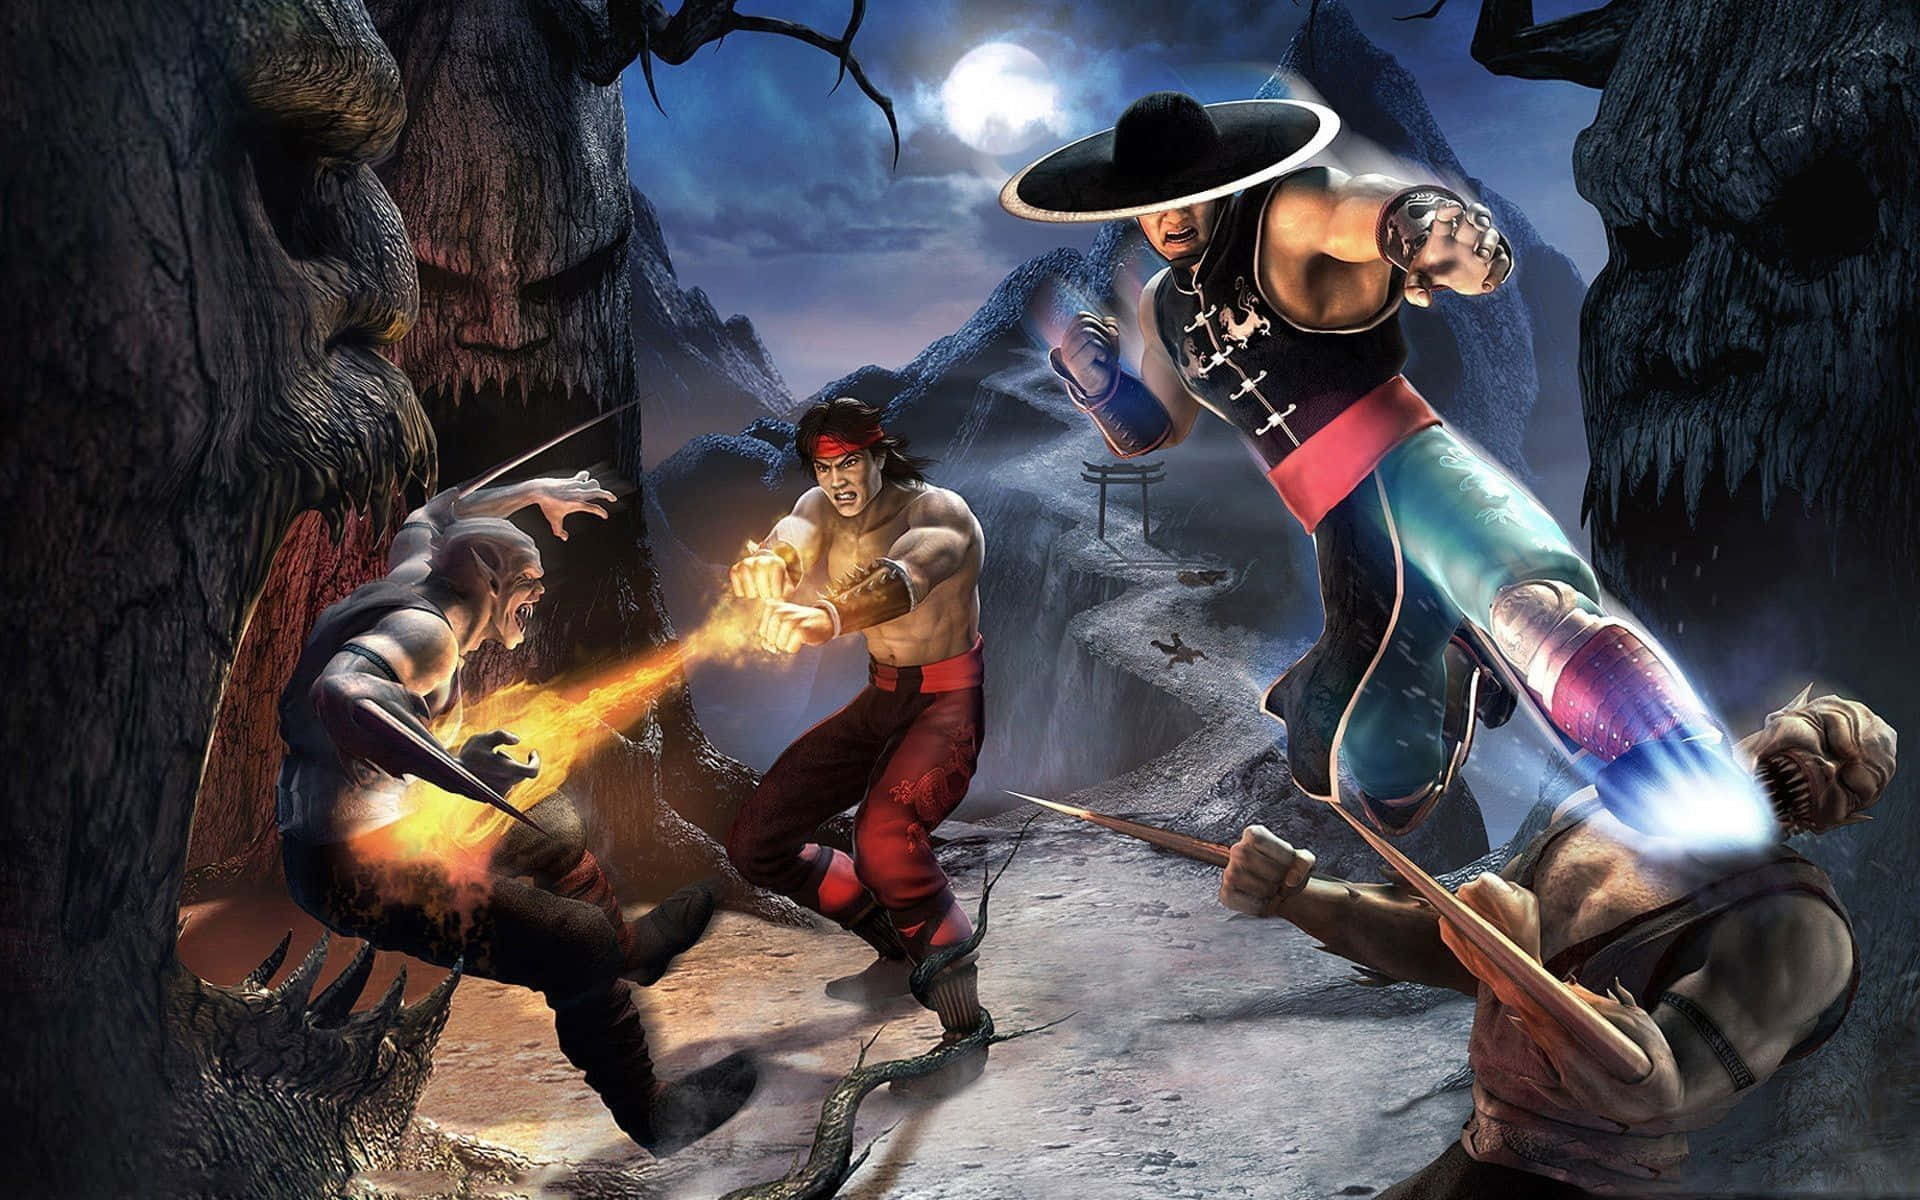 Download Liu Kang in action, the Mortal Kombat Dragon Warrior Wallpaper ...